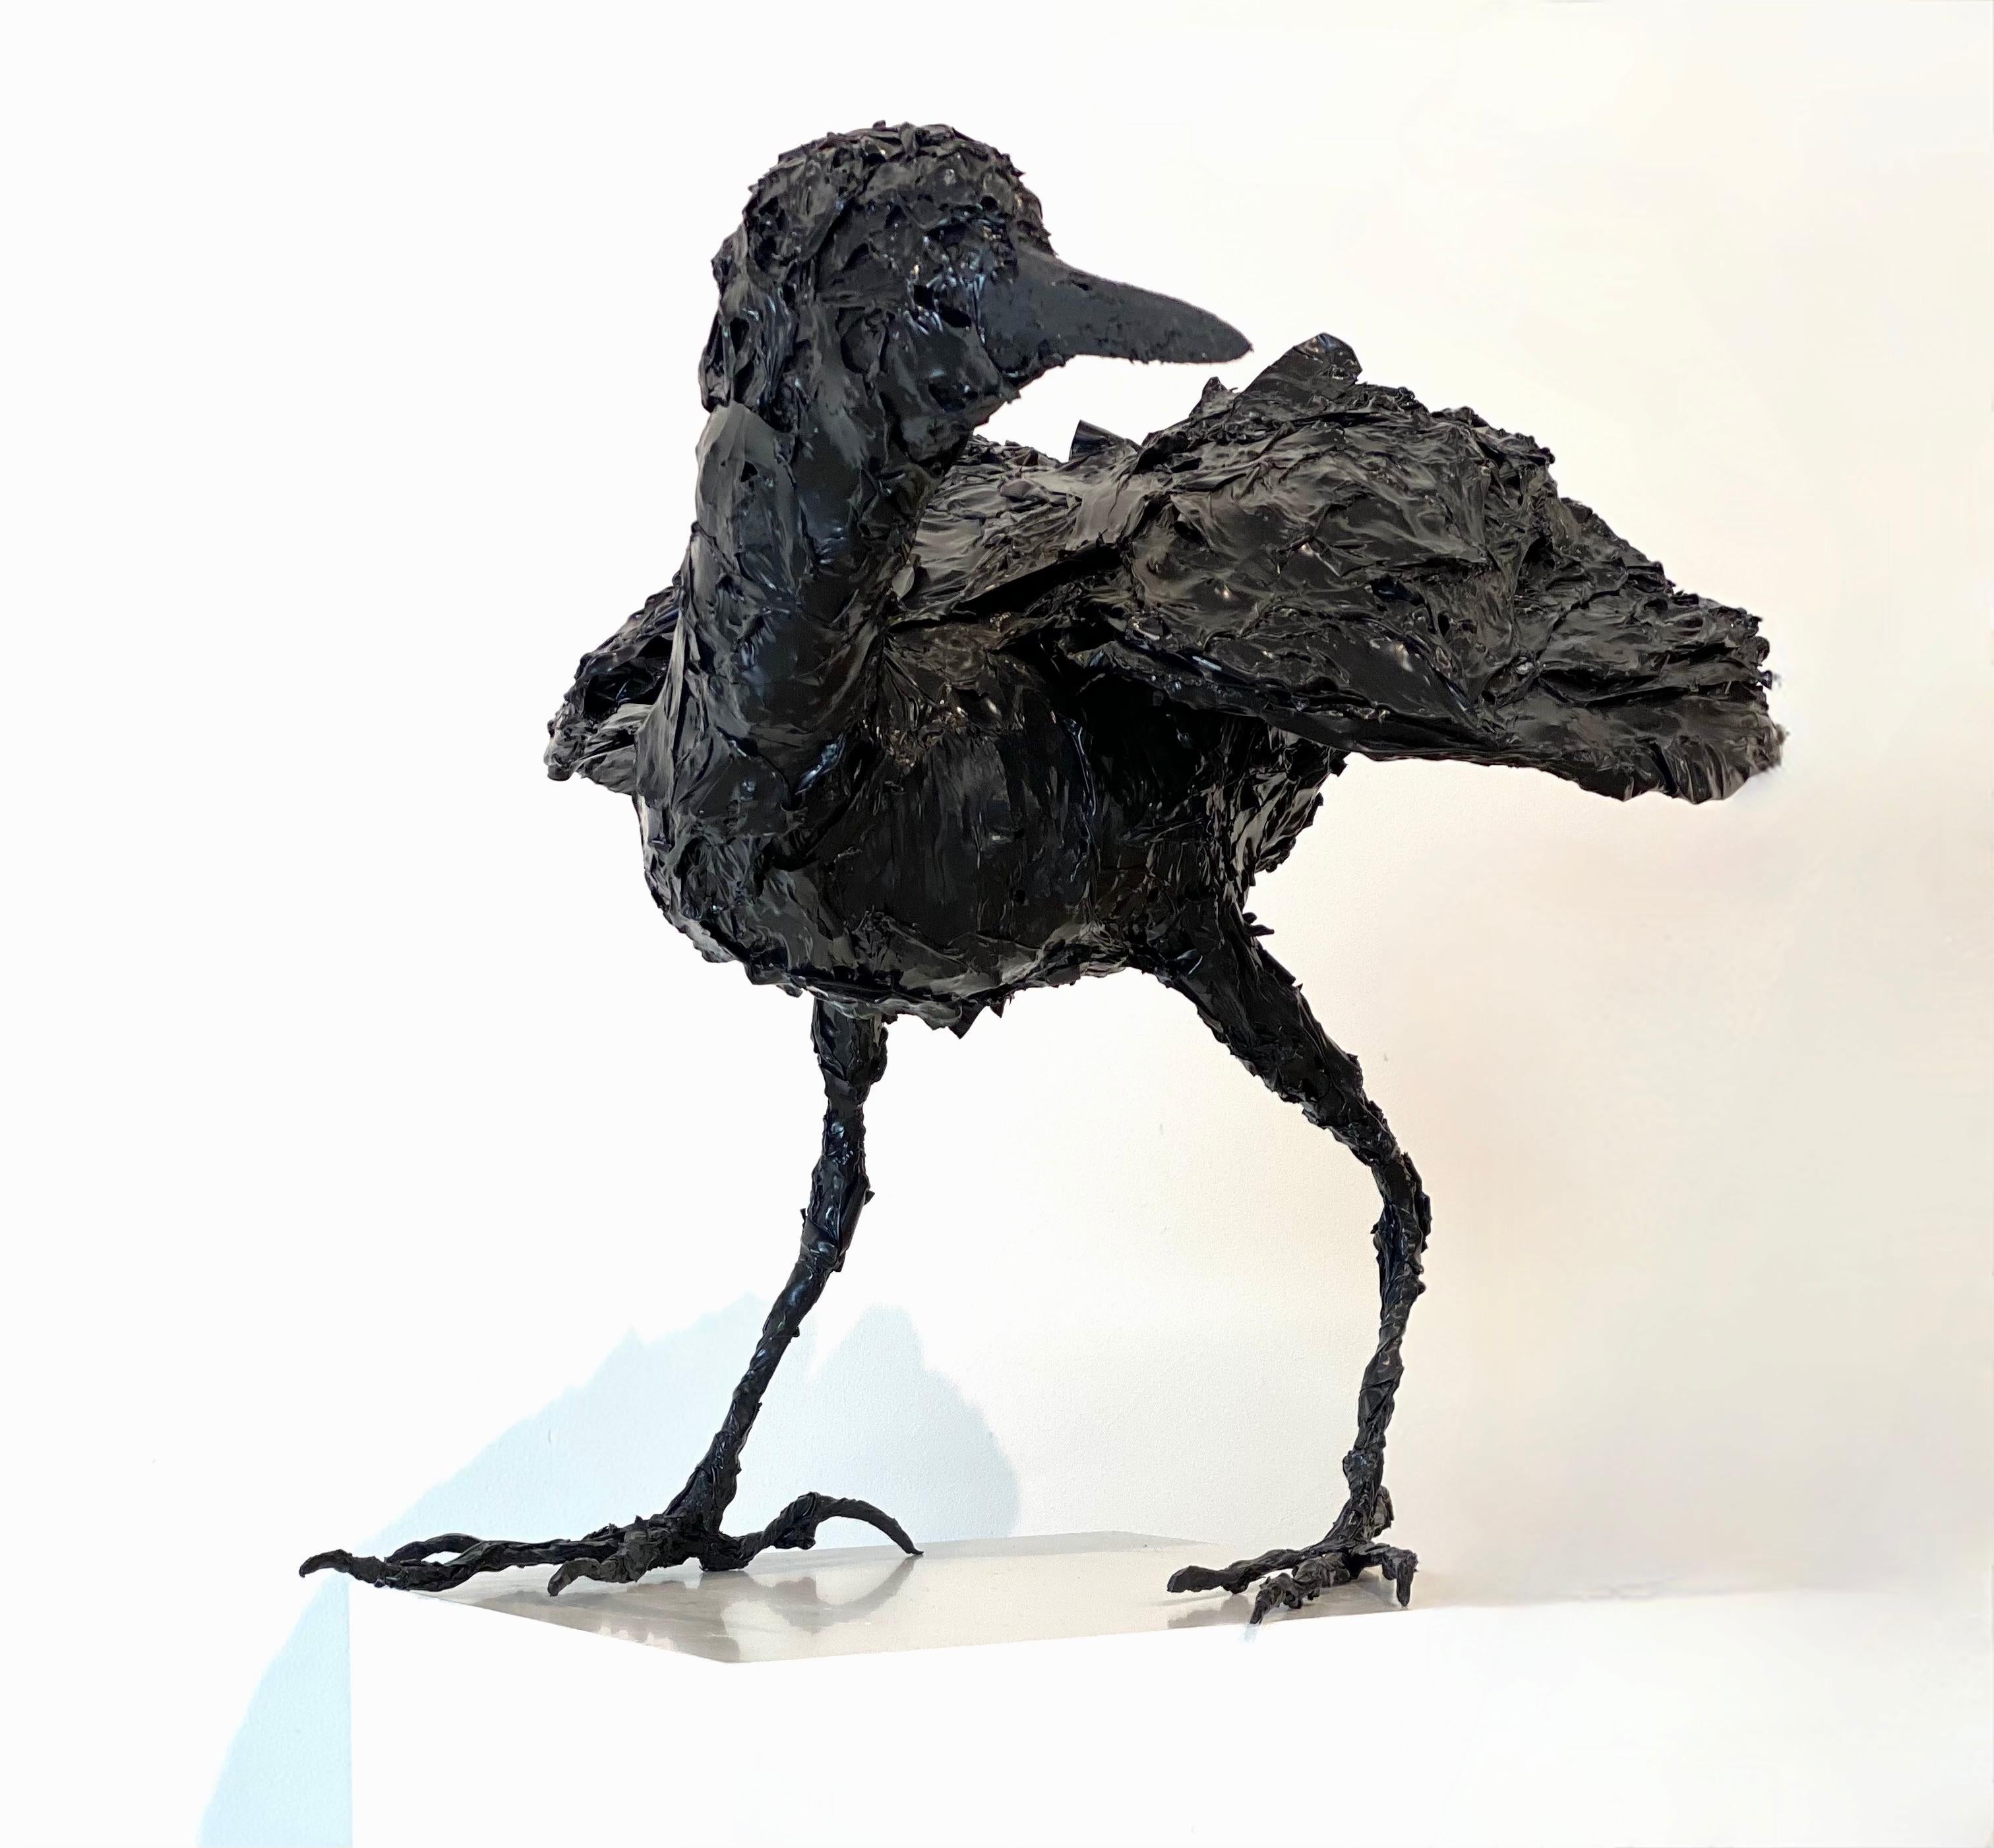 Eric Schutte Figurative Sculpture - Bittern- 21st Century Sculpture of a Bird made out of recycled Black Plastics